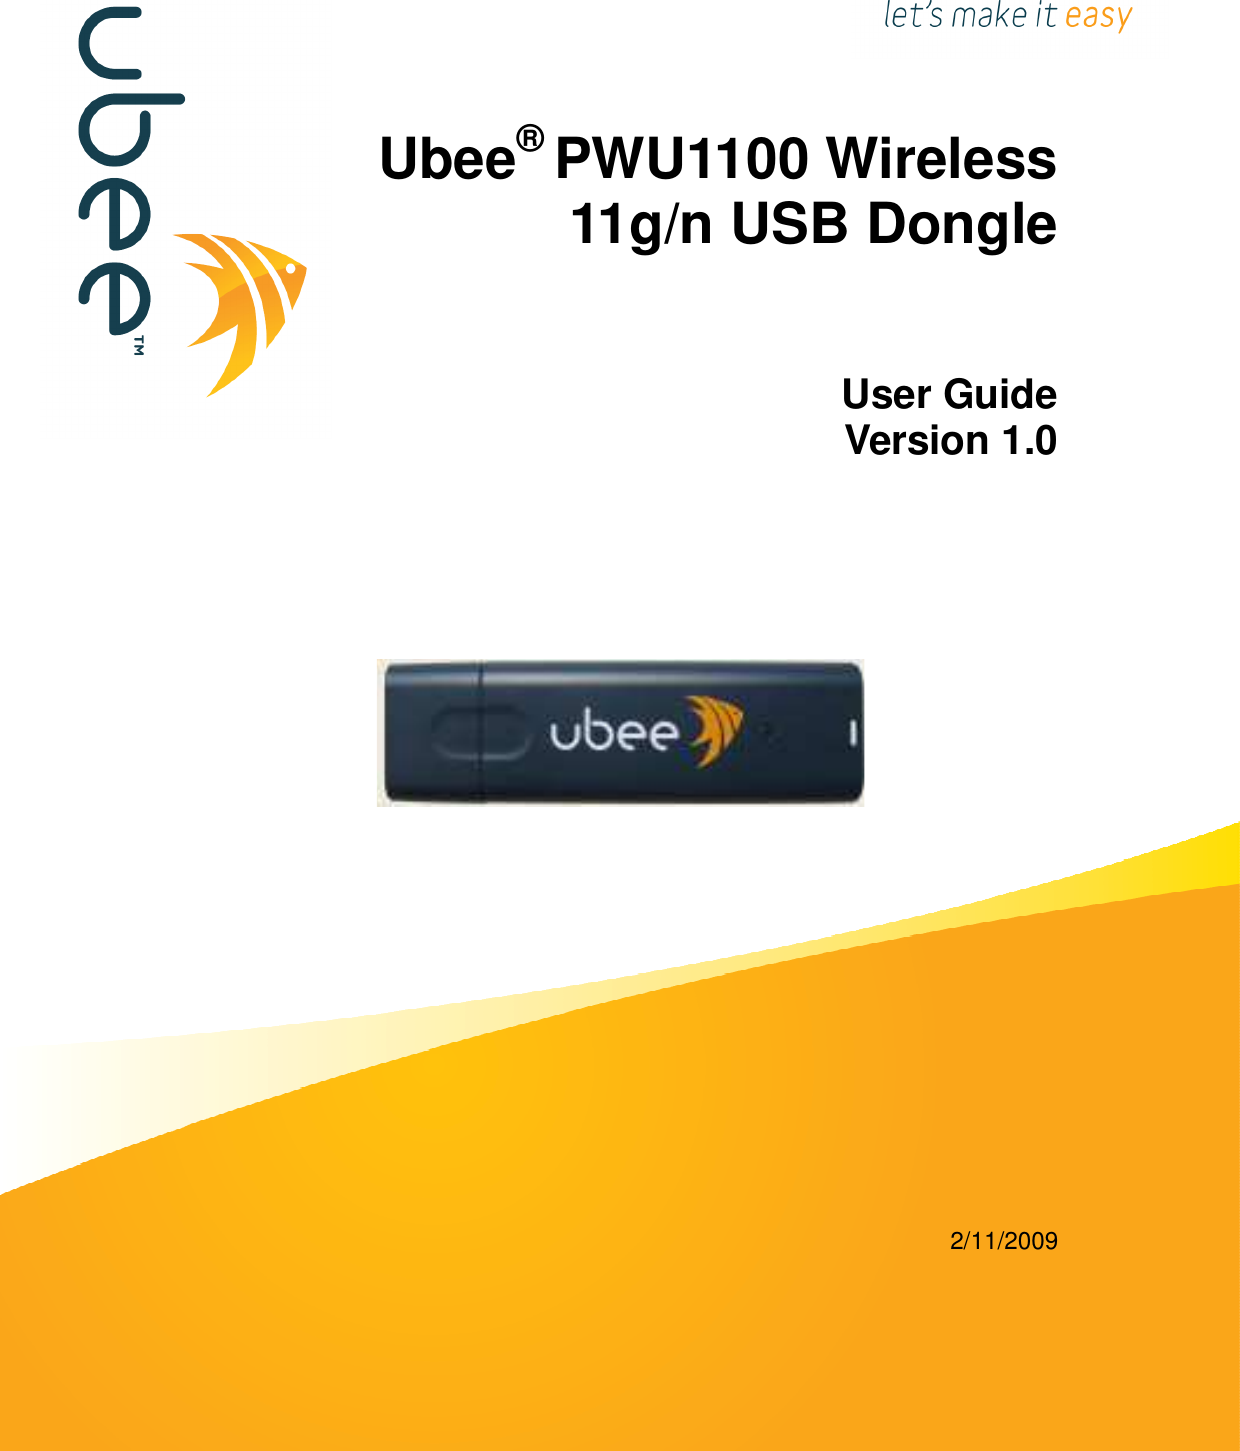     Ubee® PWU1100 Wireless 11g/n USB Dongle  User Guide Version 1.0                      2/11/2009  